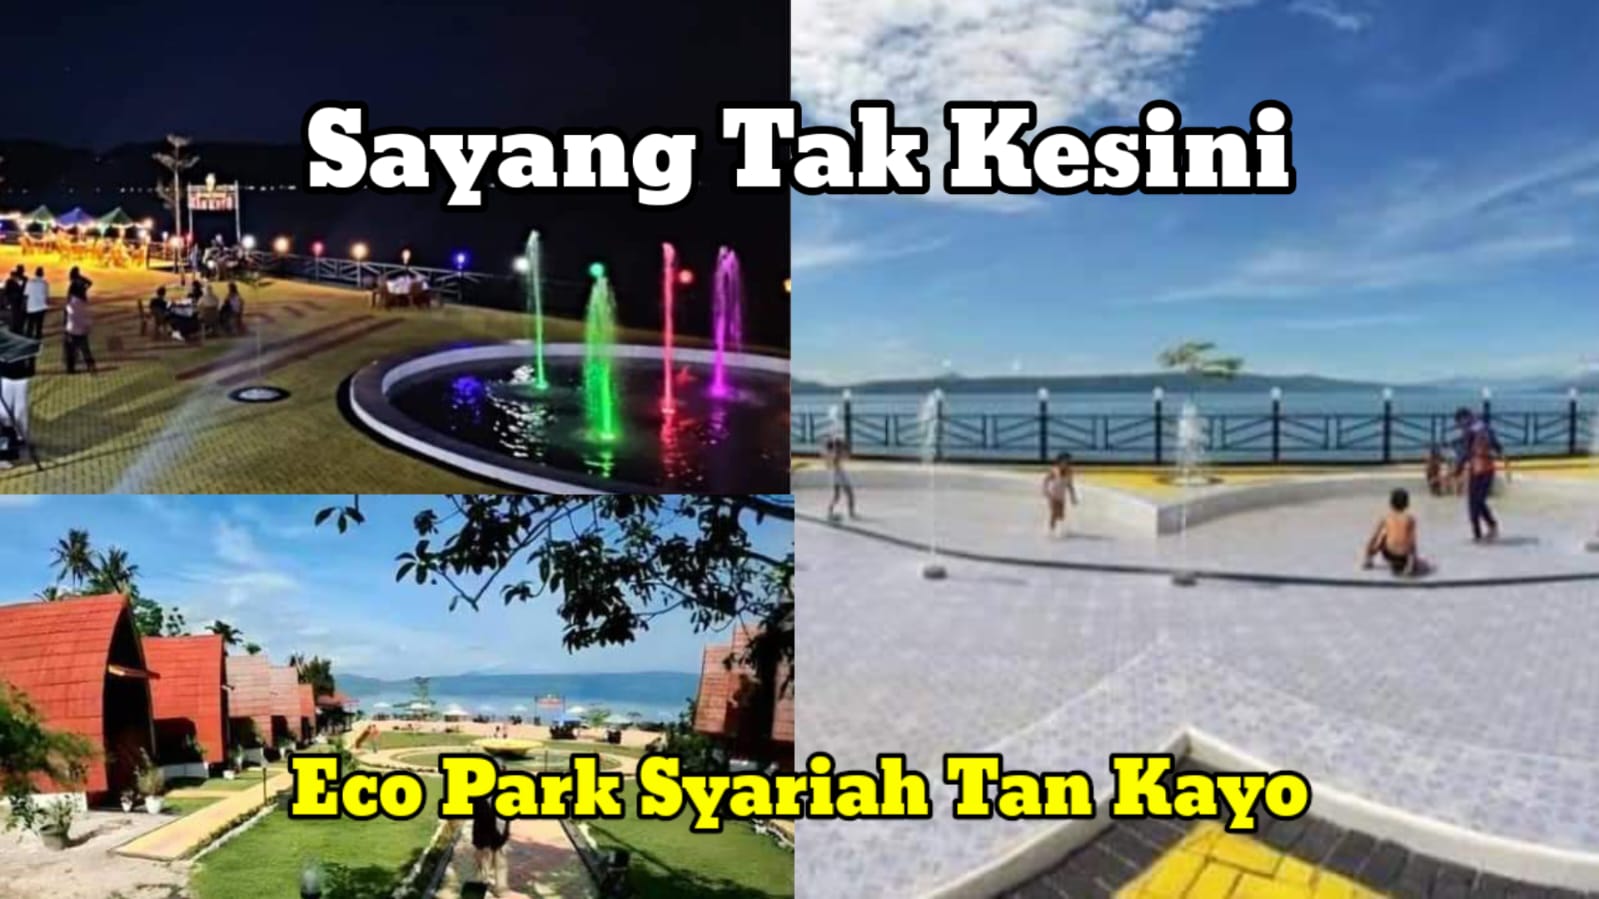 Wisata Konsep Syariah, Keindahan Danau Singkarak pada Malam Hari Dilihat Dari Eco Park Syariah Tankayo